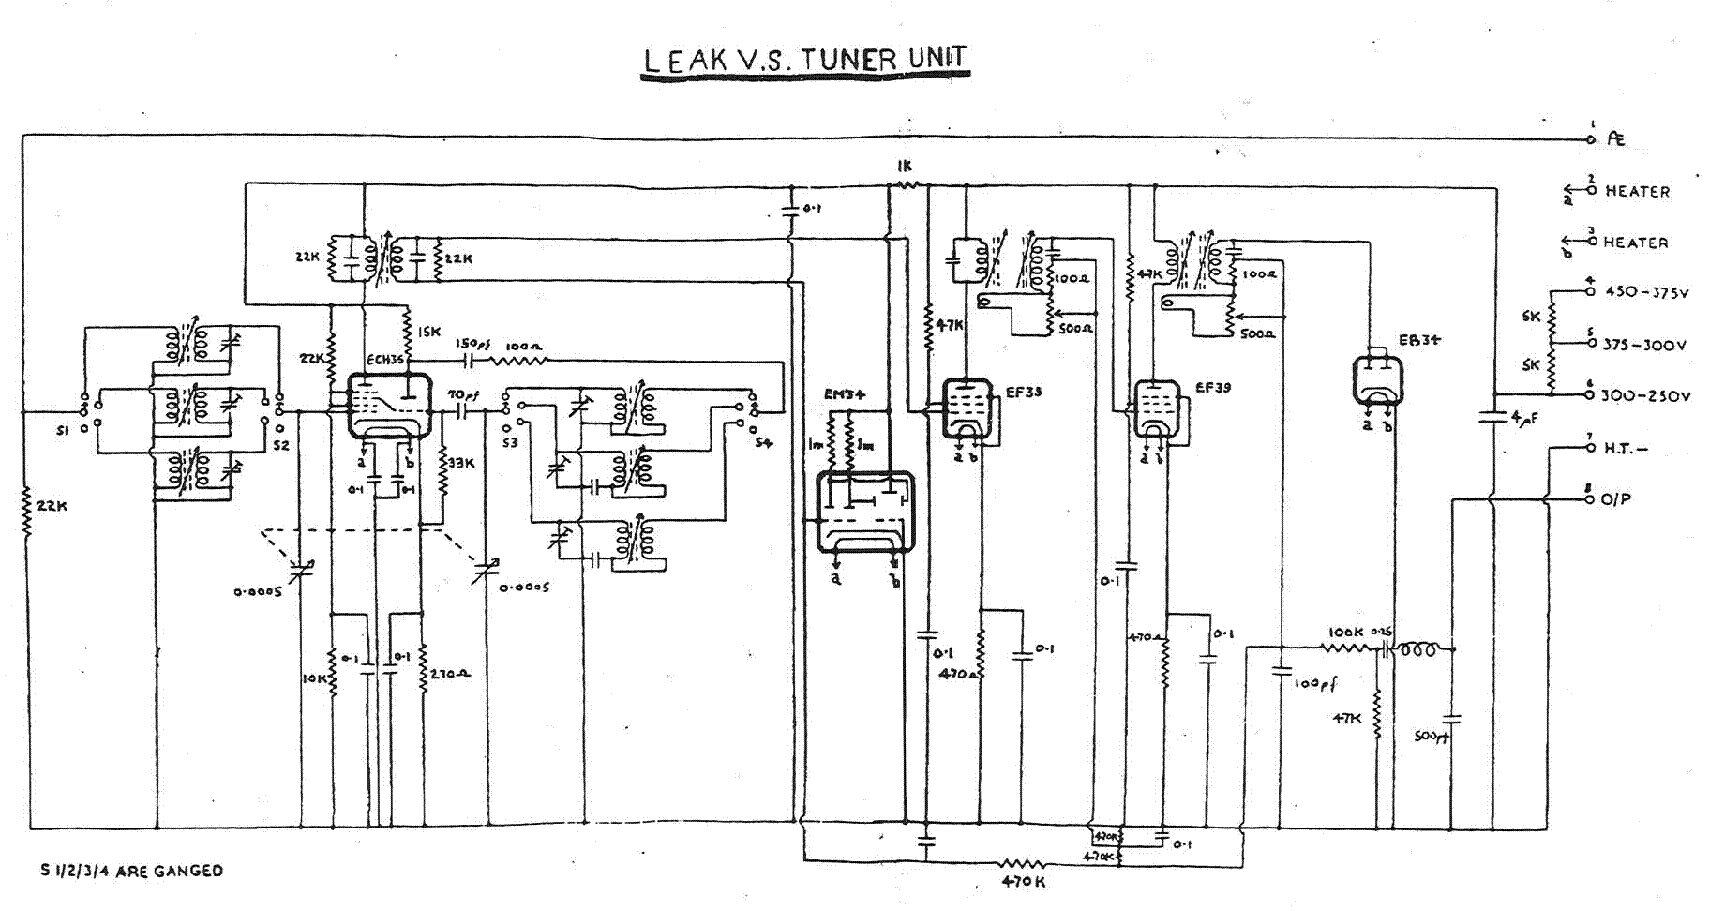 LEAK VS TUNER 1951 SCH service manual (1st page)